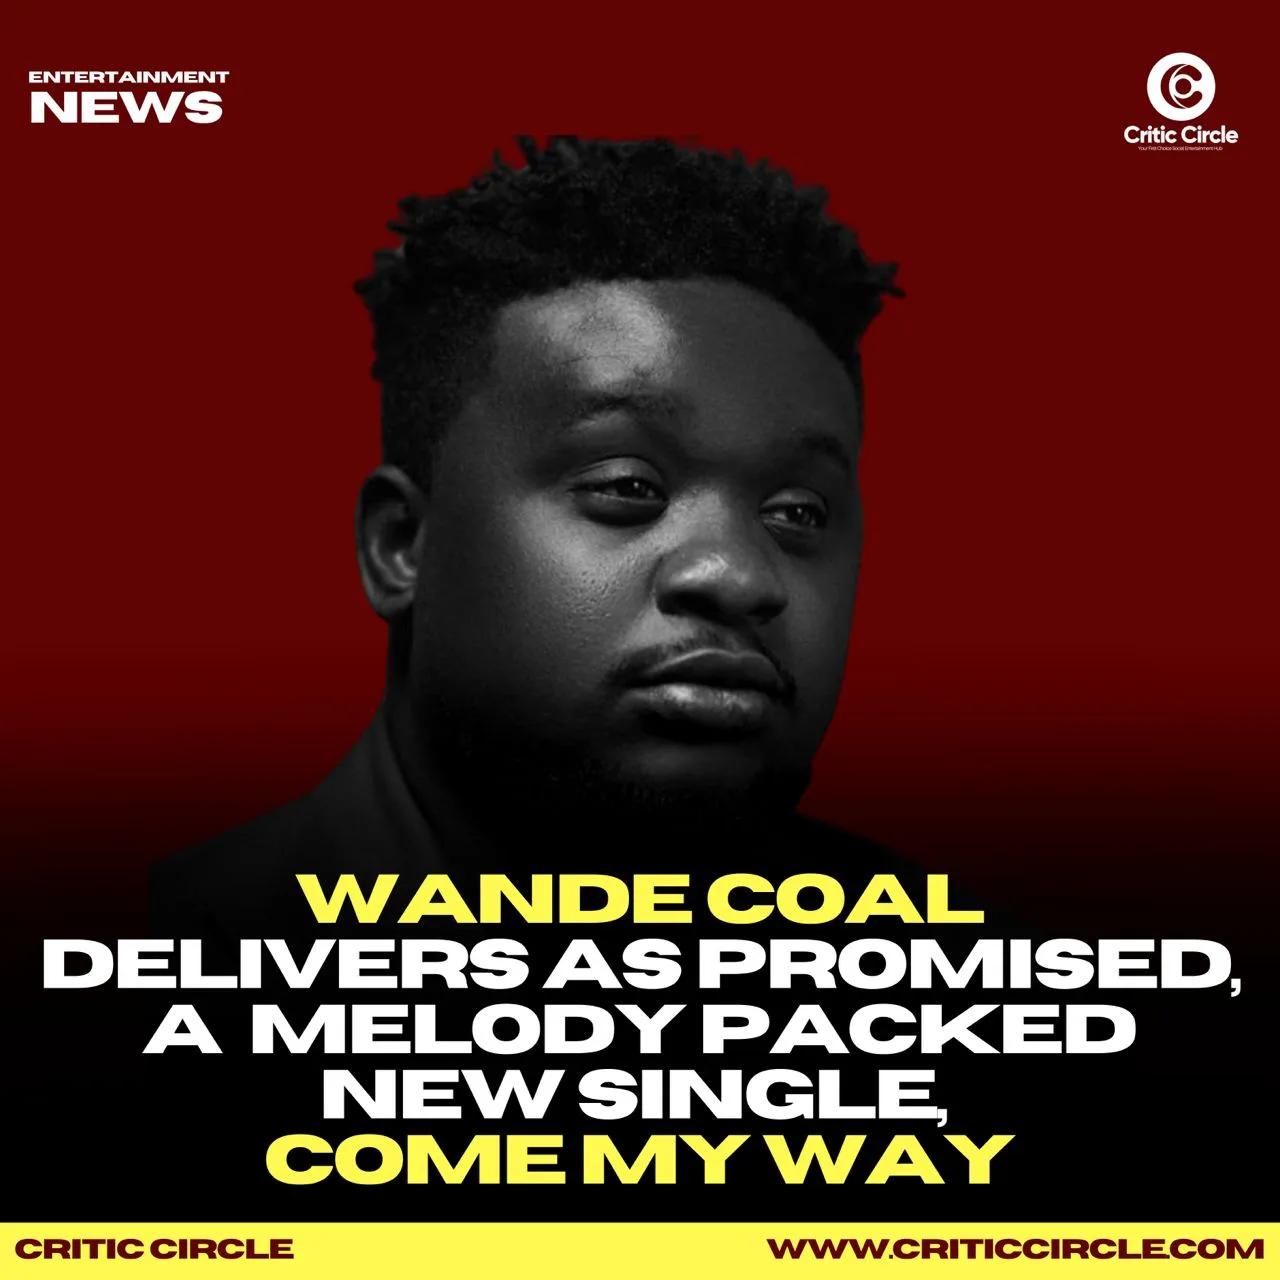 Afro-pop: Wande Coal - Come my Way [Stream]